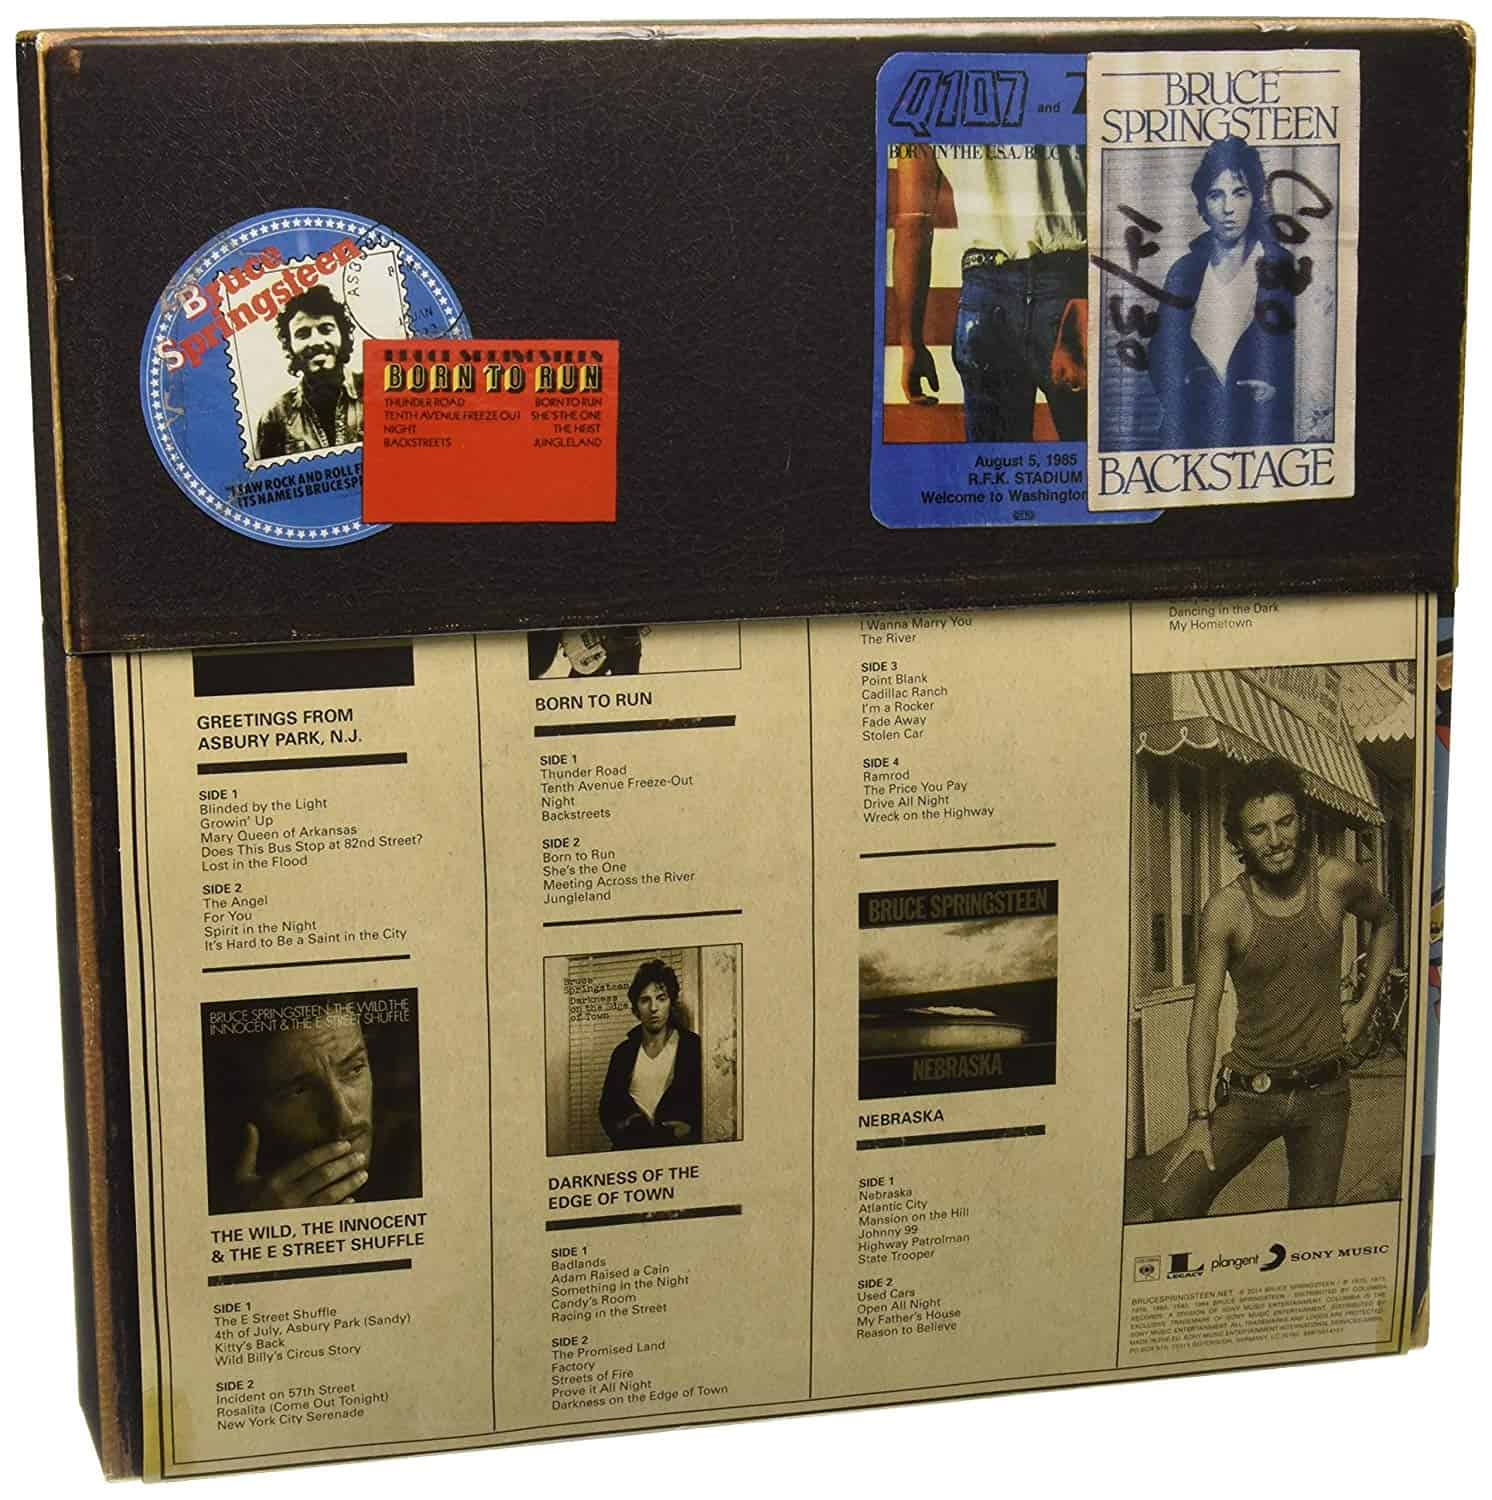 Vinyl Reviews - Bruce Springsteen - The Album Collection Vol. 1 